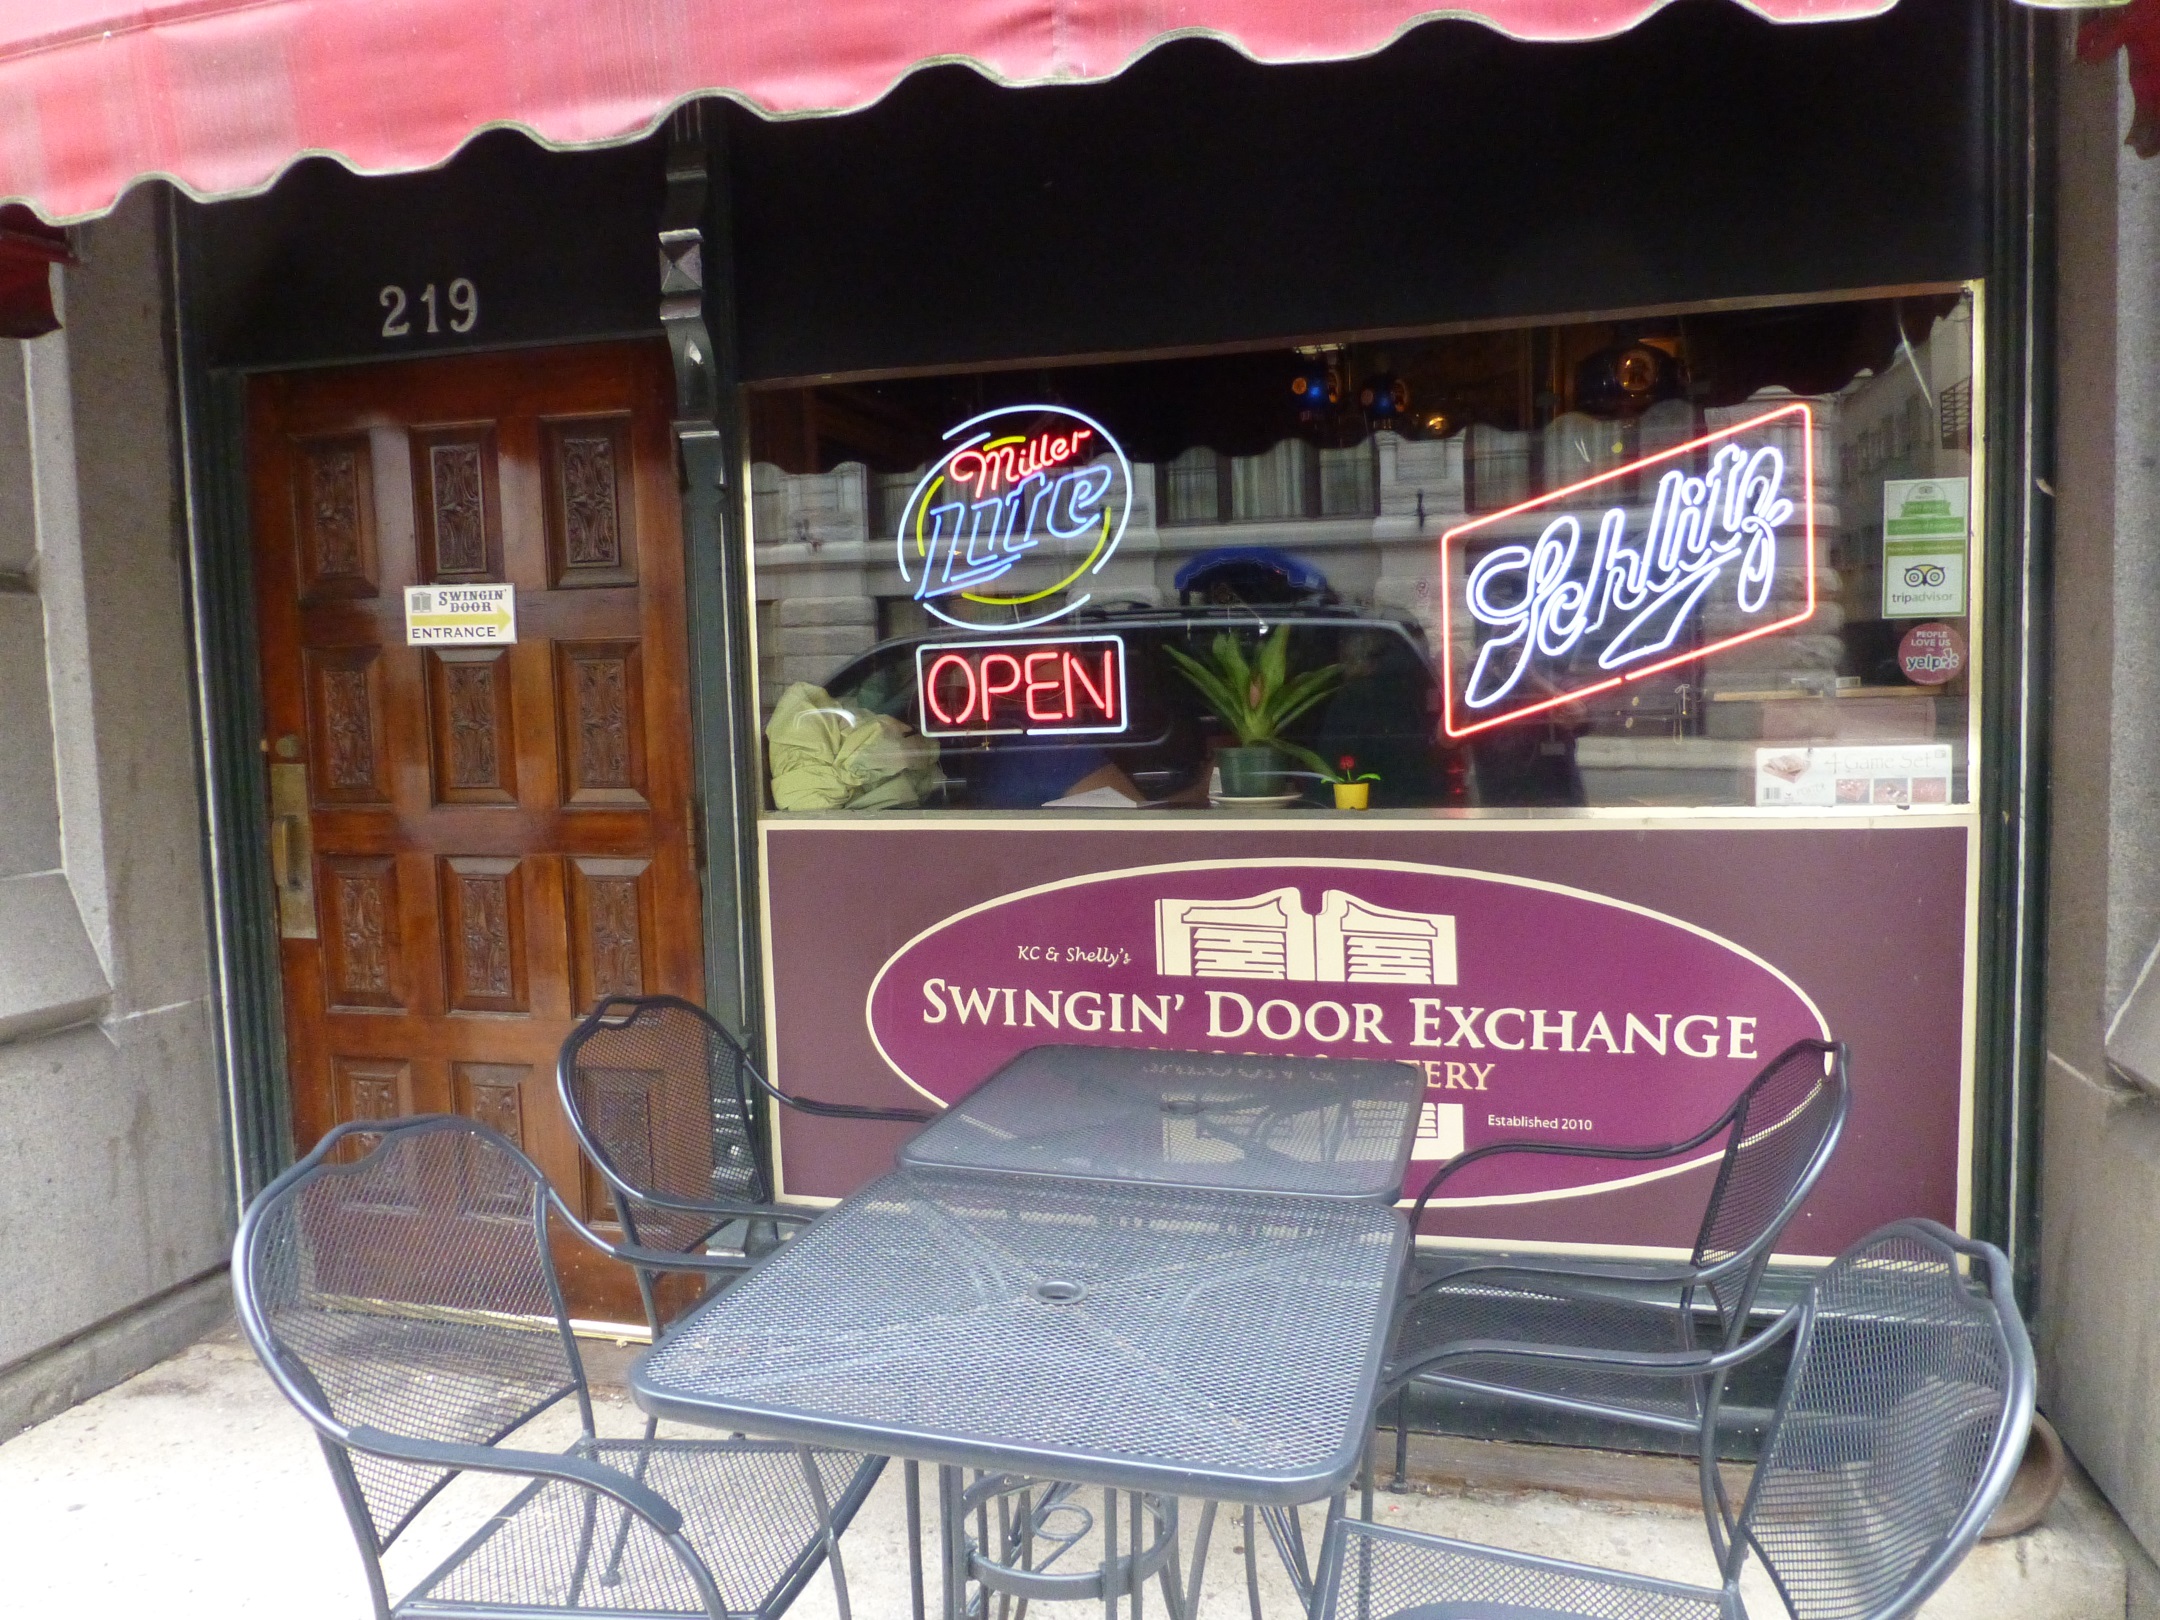 Sidewalk seating at the Swingin’ Door Exchange